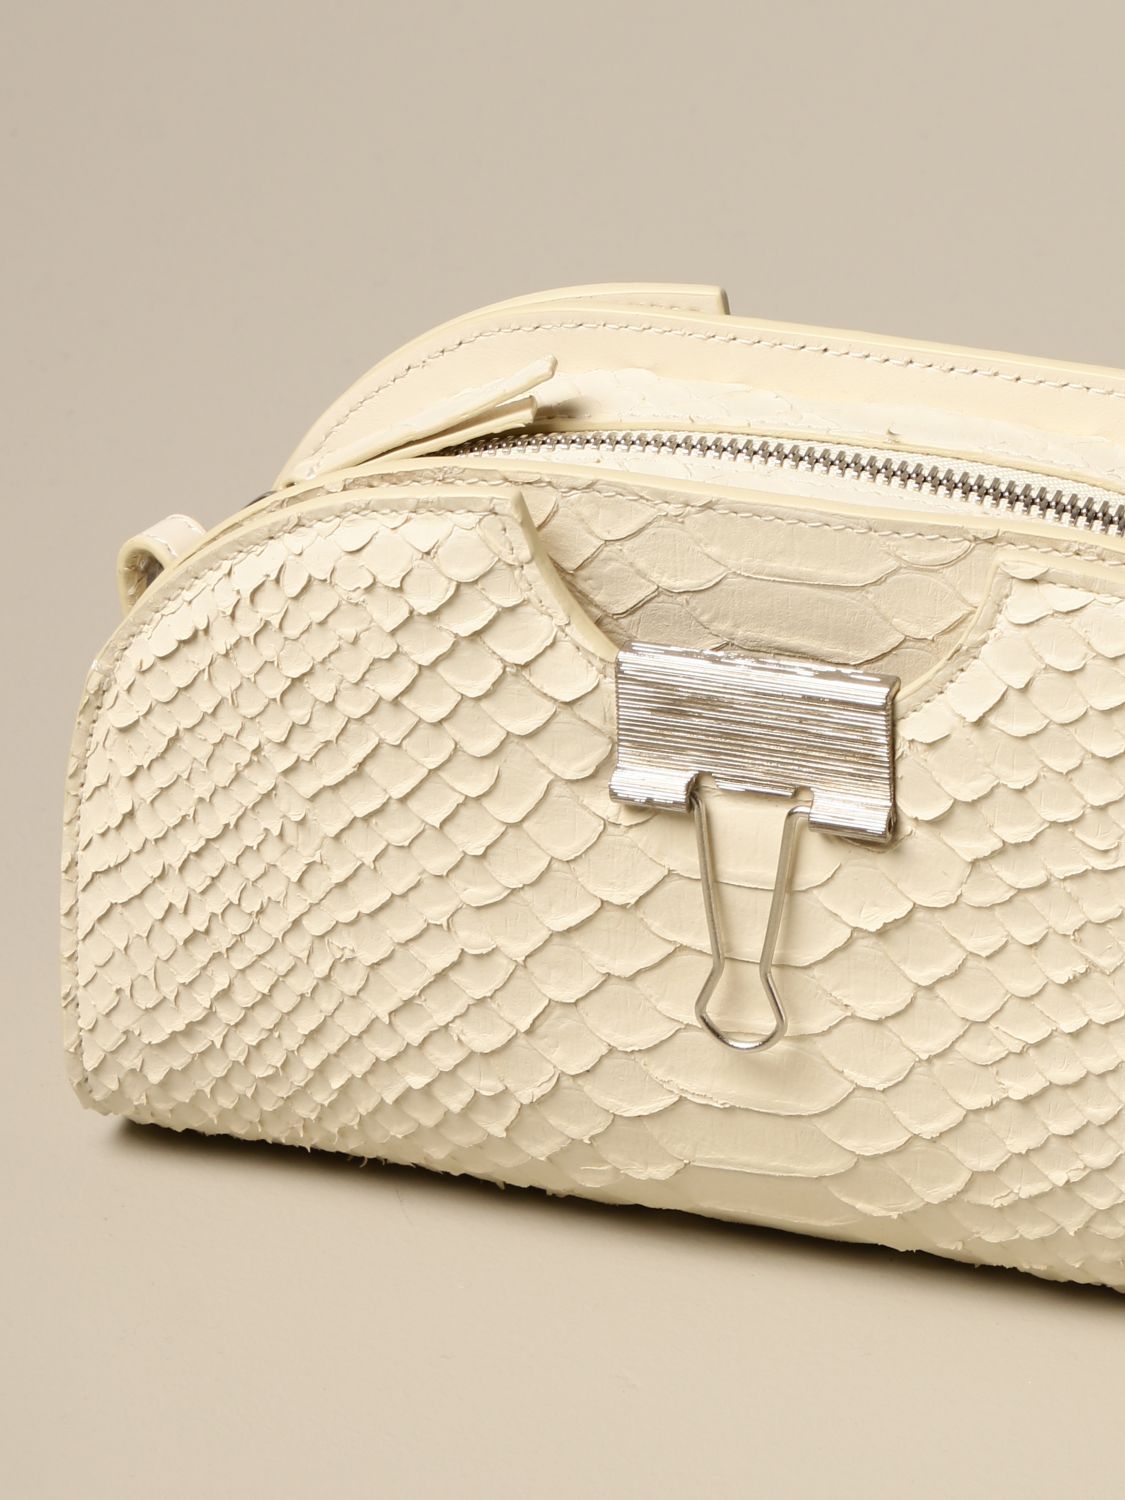 Off-White Made Black Crocodile Binder Clip Bag